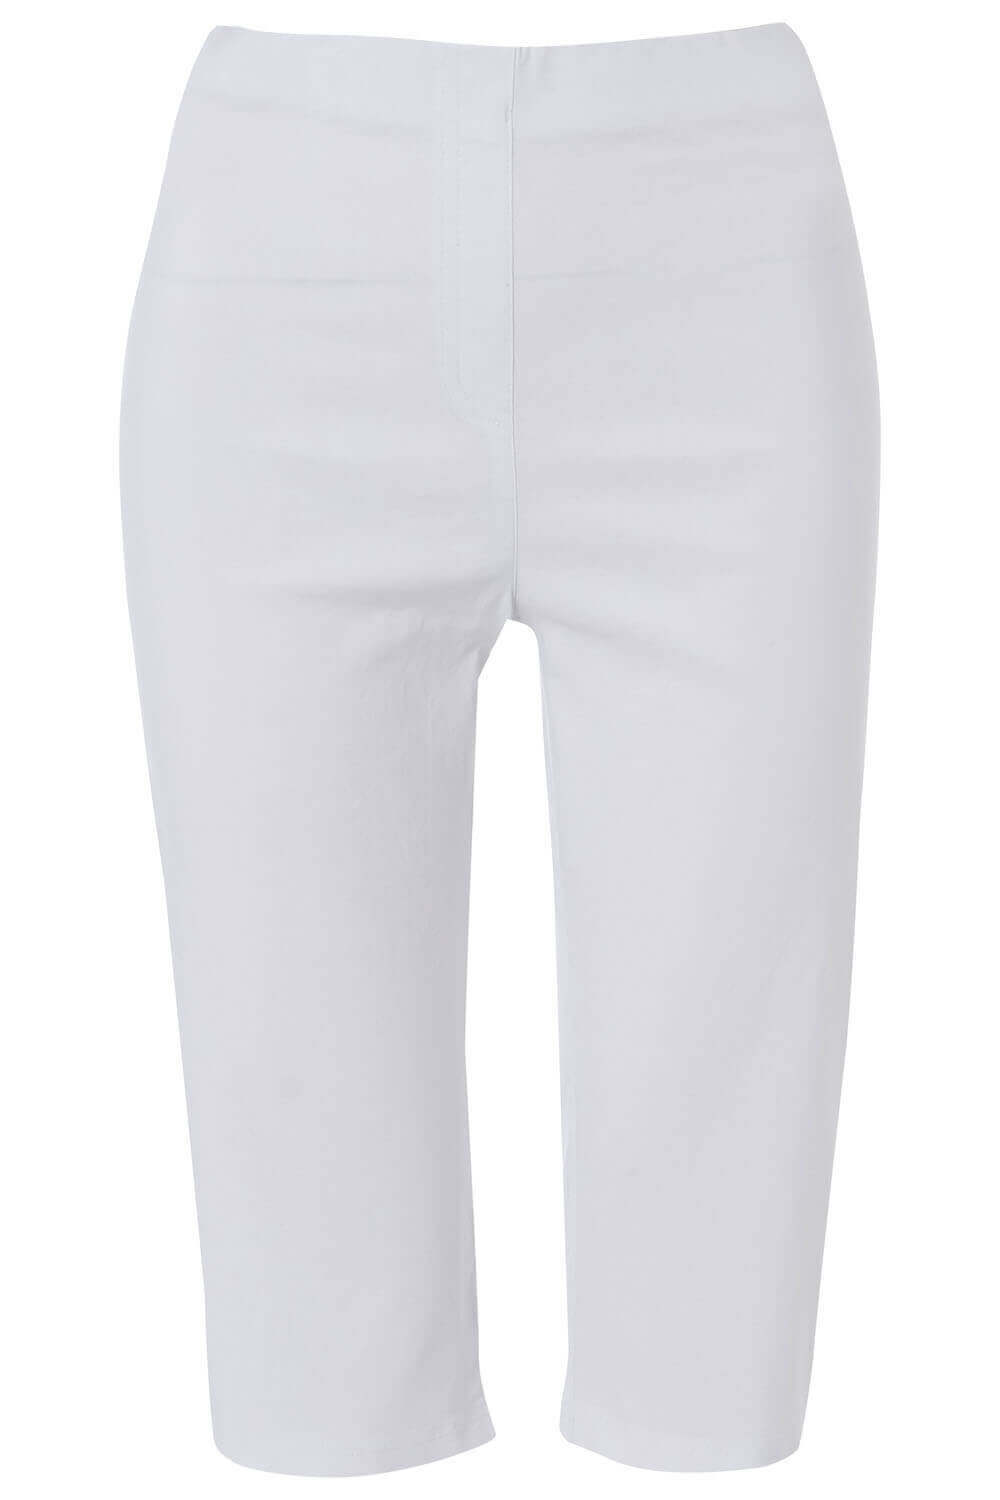 White Knee Length Stretch Shorts, Image 6 of 6